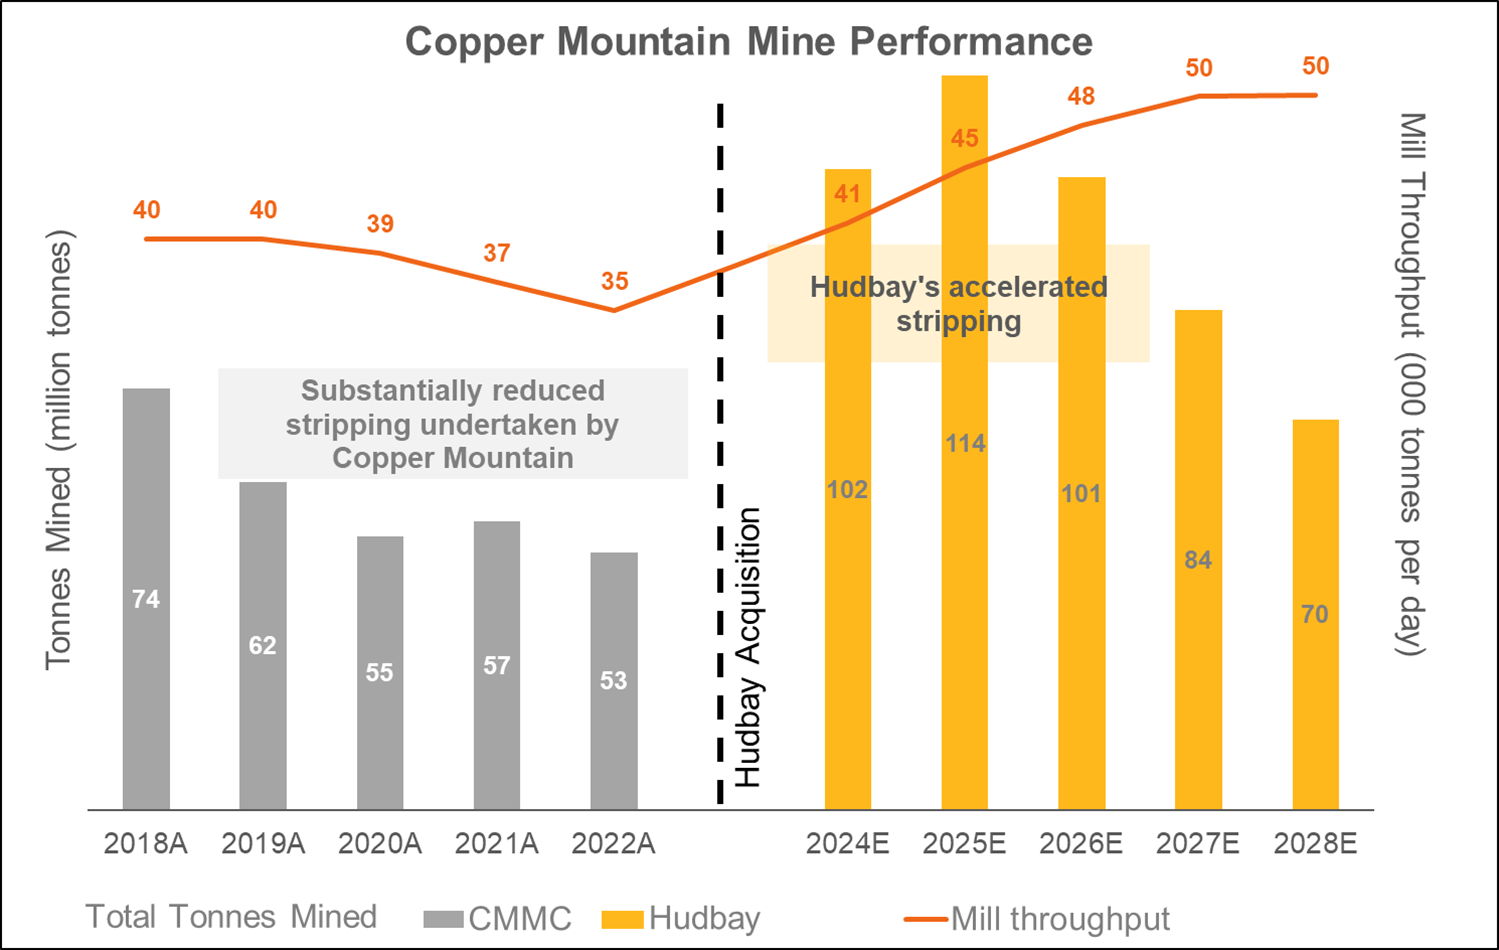 Figure 4: Copper Mountain Mine Performance